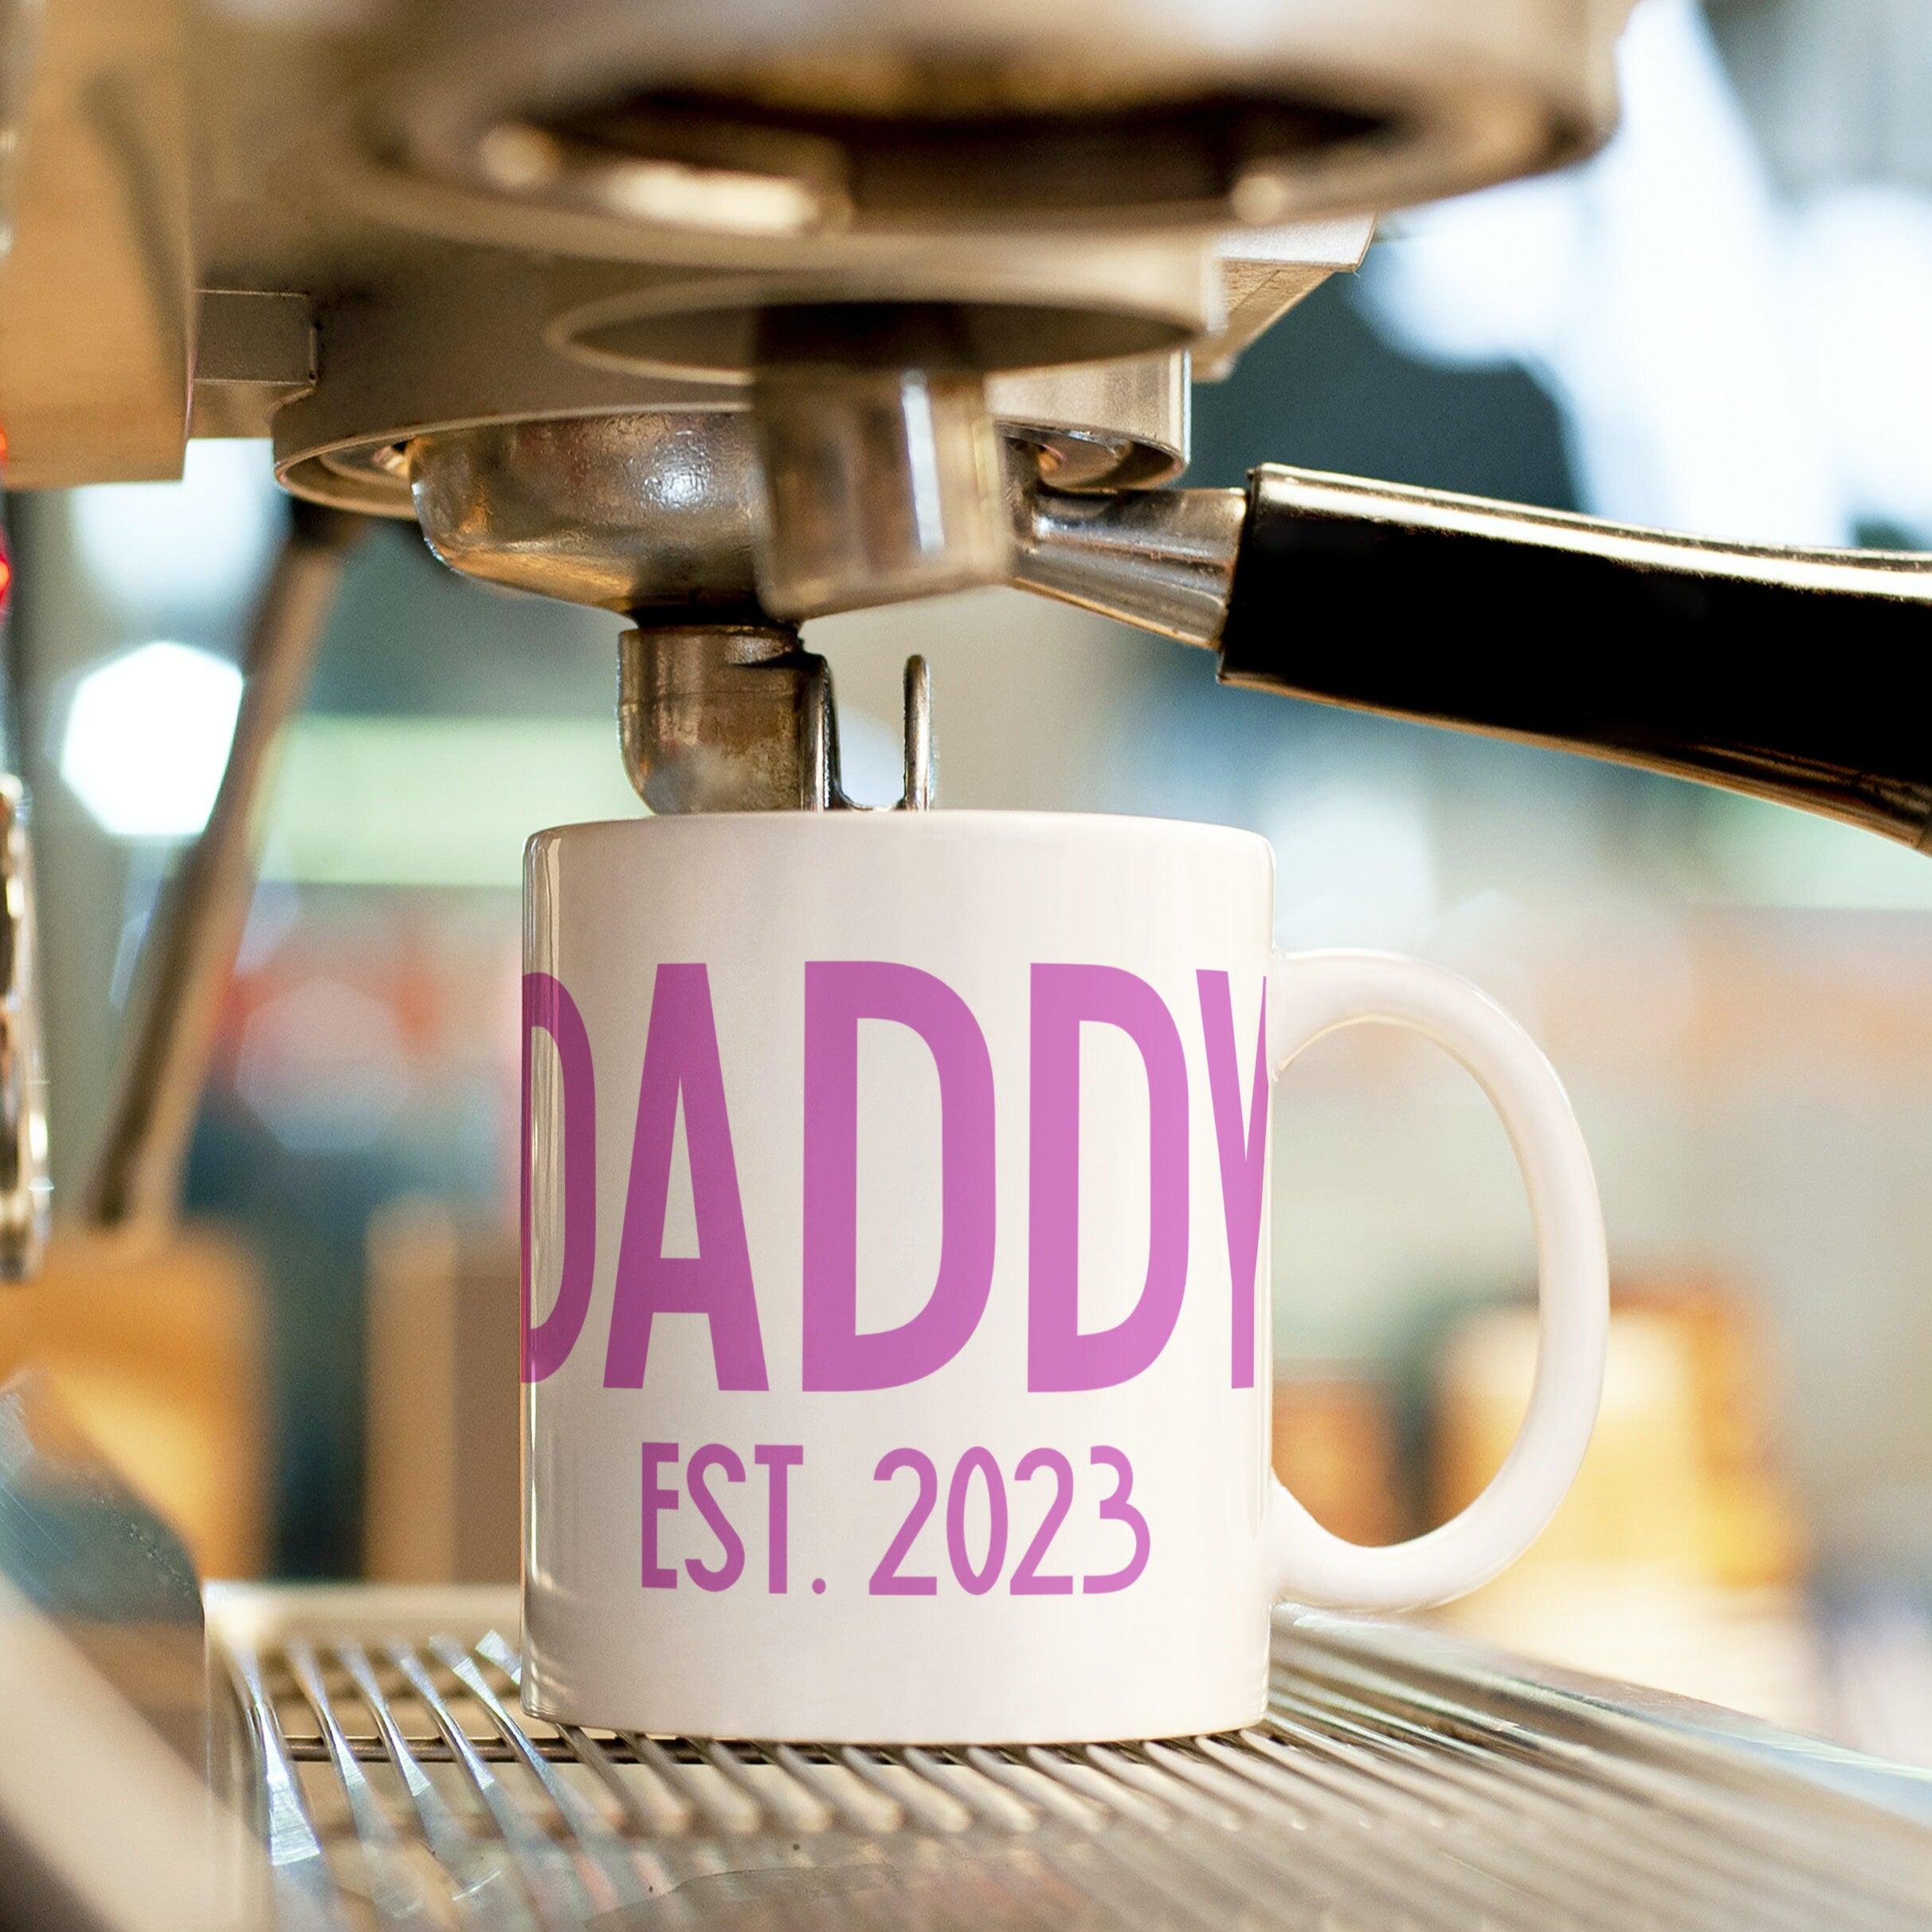 Daddy Est 2023 Mug - Father's Day Gift for New Dad - Custom Mug for Grandparent - New Father Gift - First Fathers Day Coffee Mug - Daddy Mug